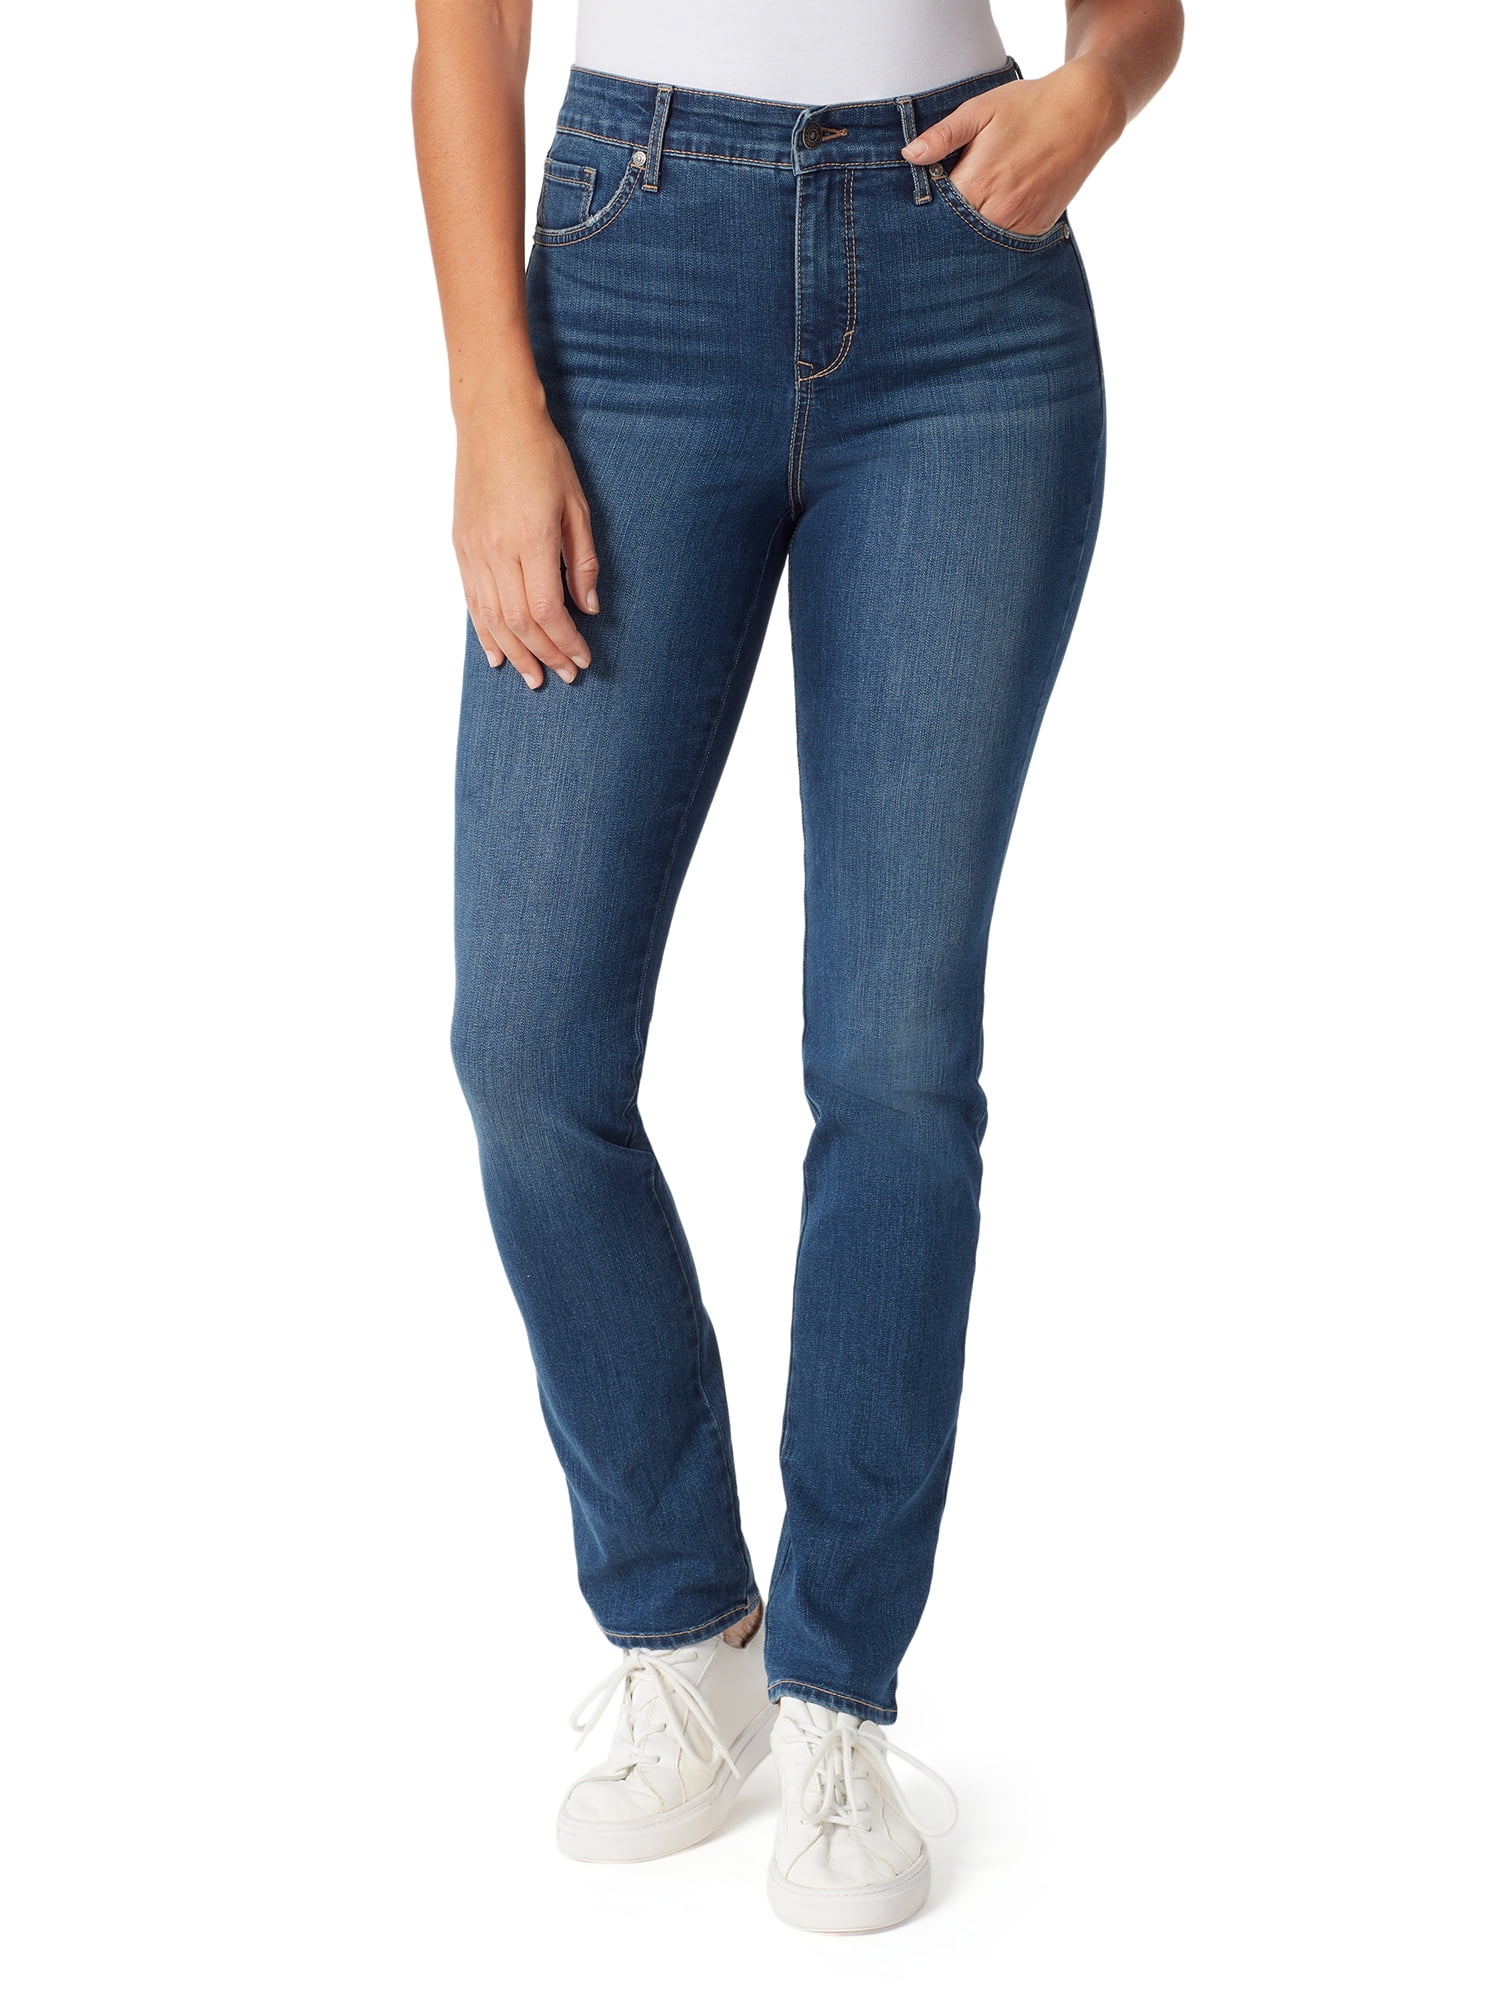 Gloria Vanderbilt Women's Generation High Rise Skinny Jeans - Walmart.com